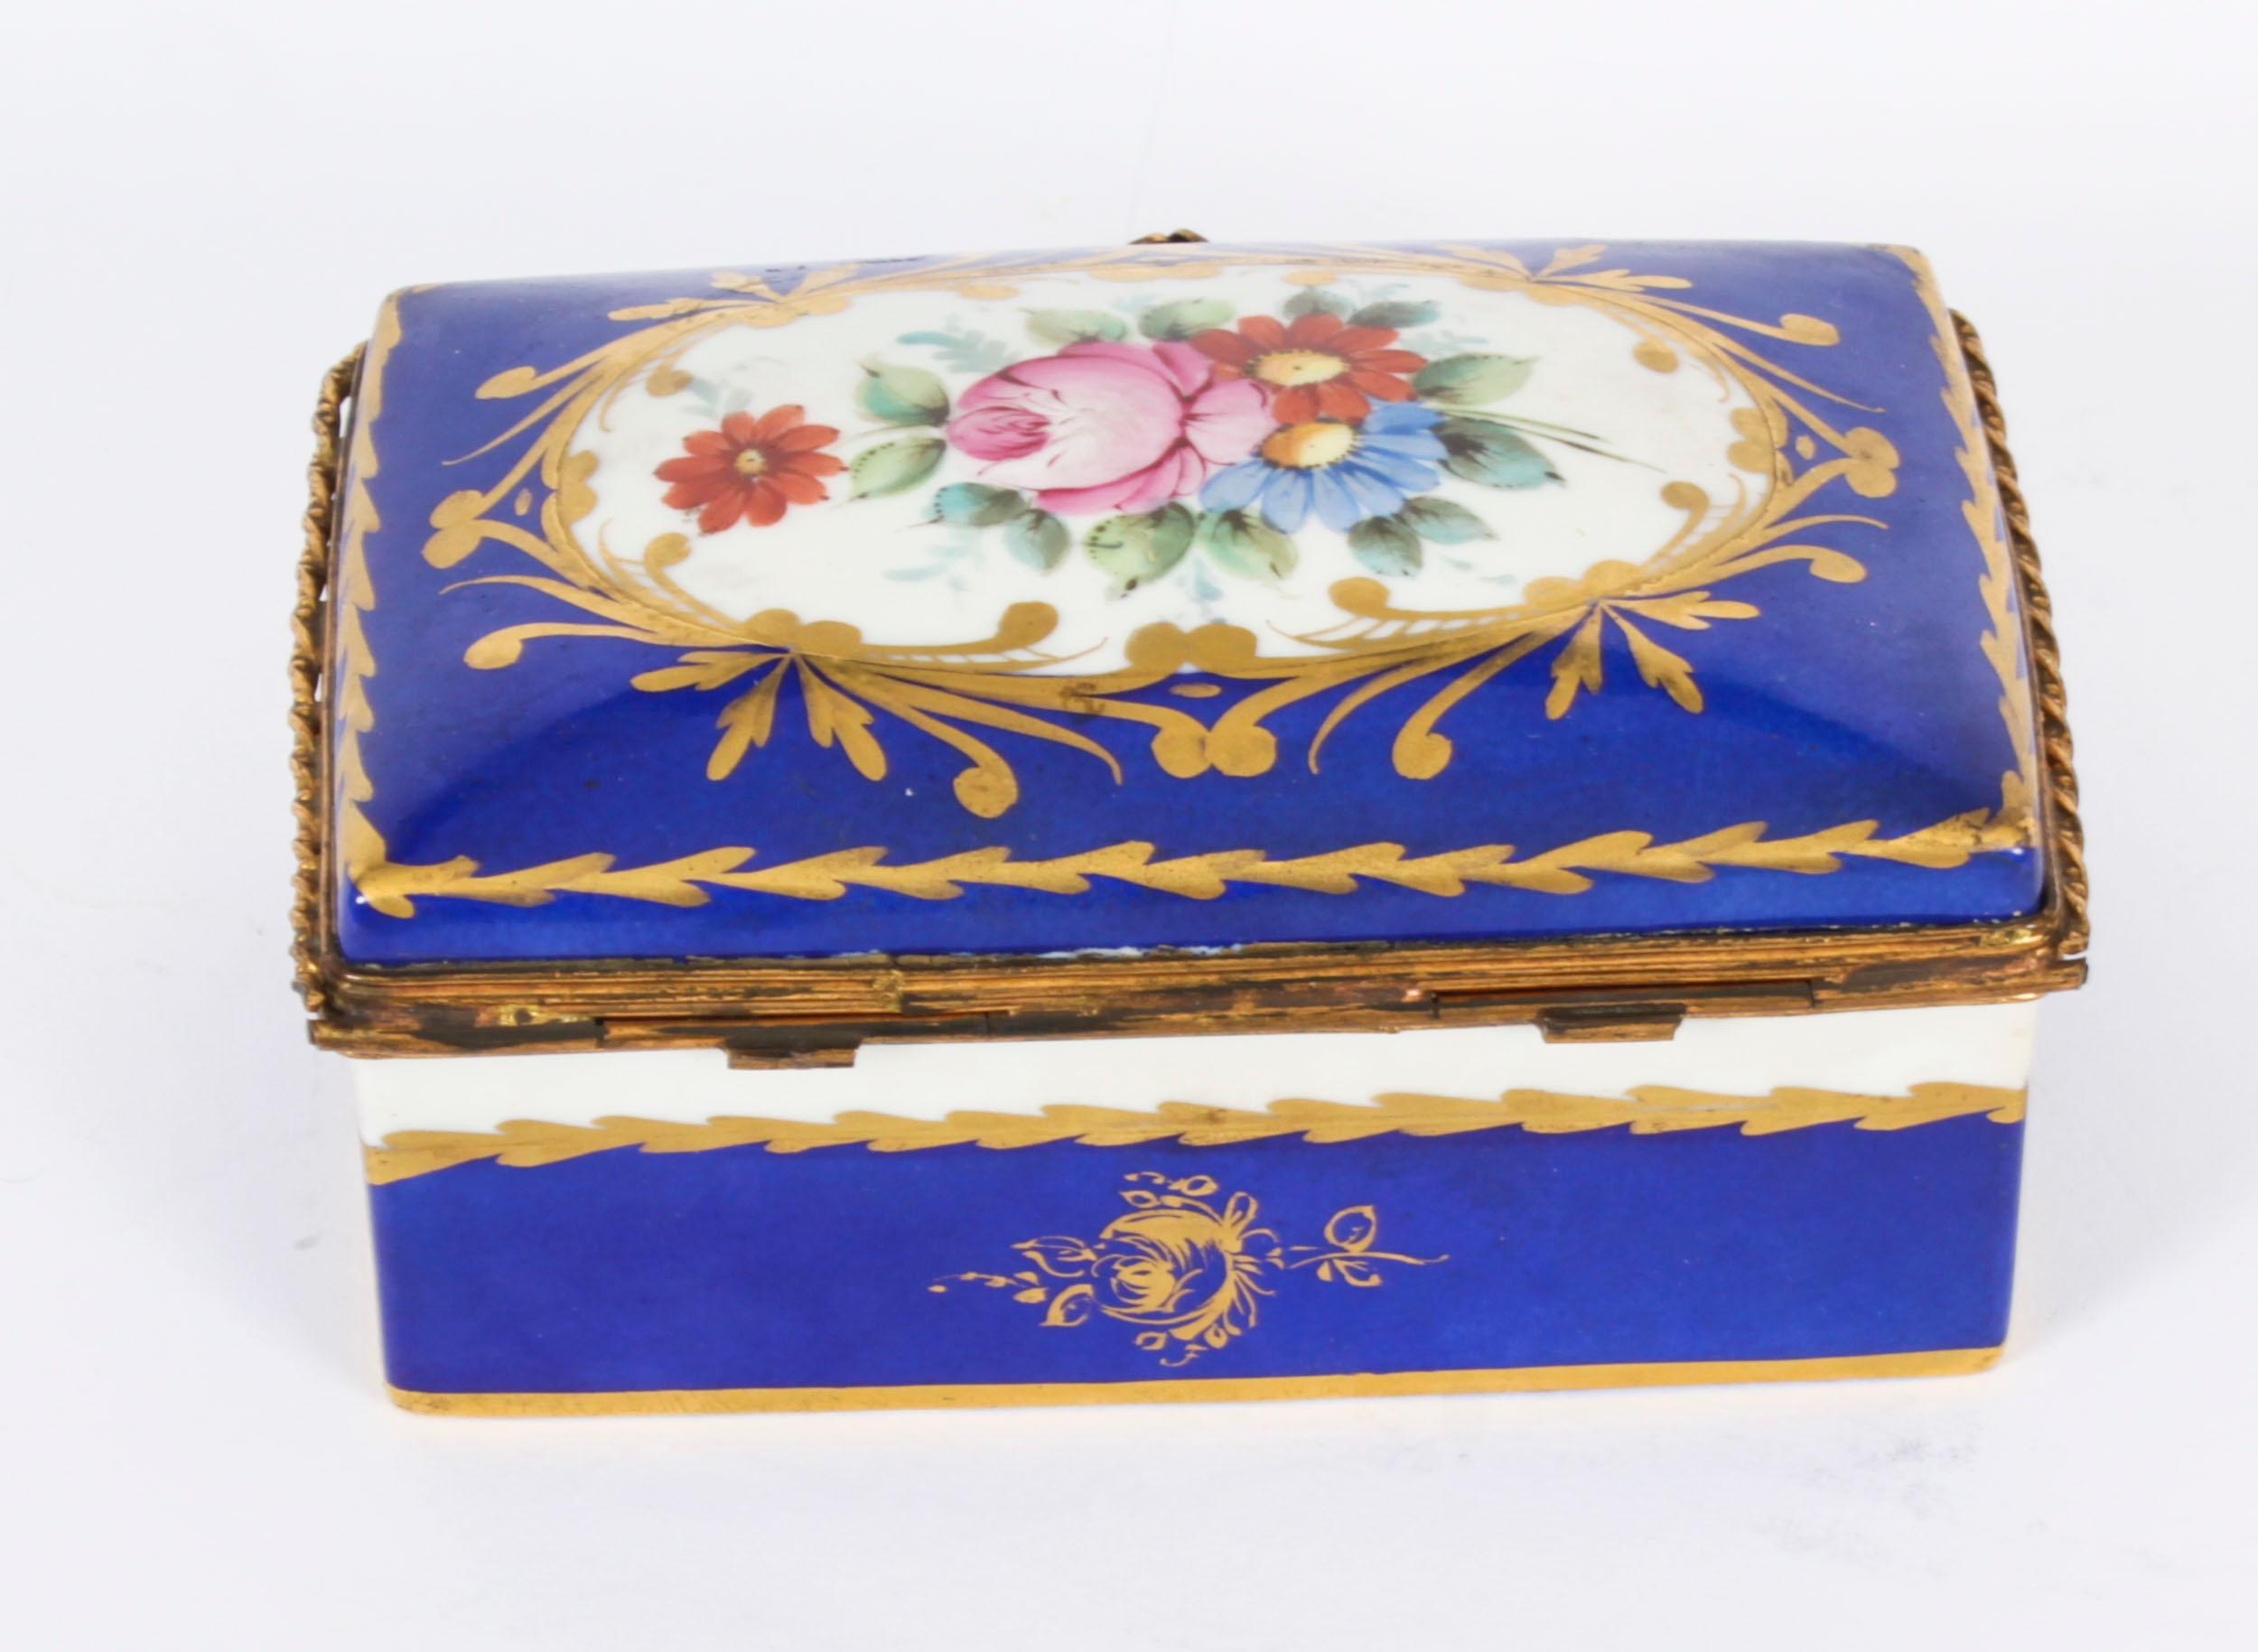 Porcelain Antique Limoges Royal Blue Ormolu Mounted Casket Box 19h Century For Sale